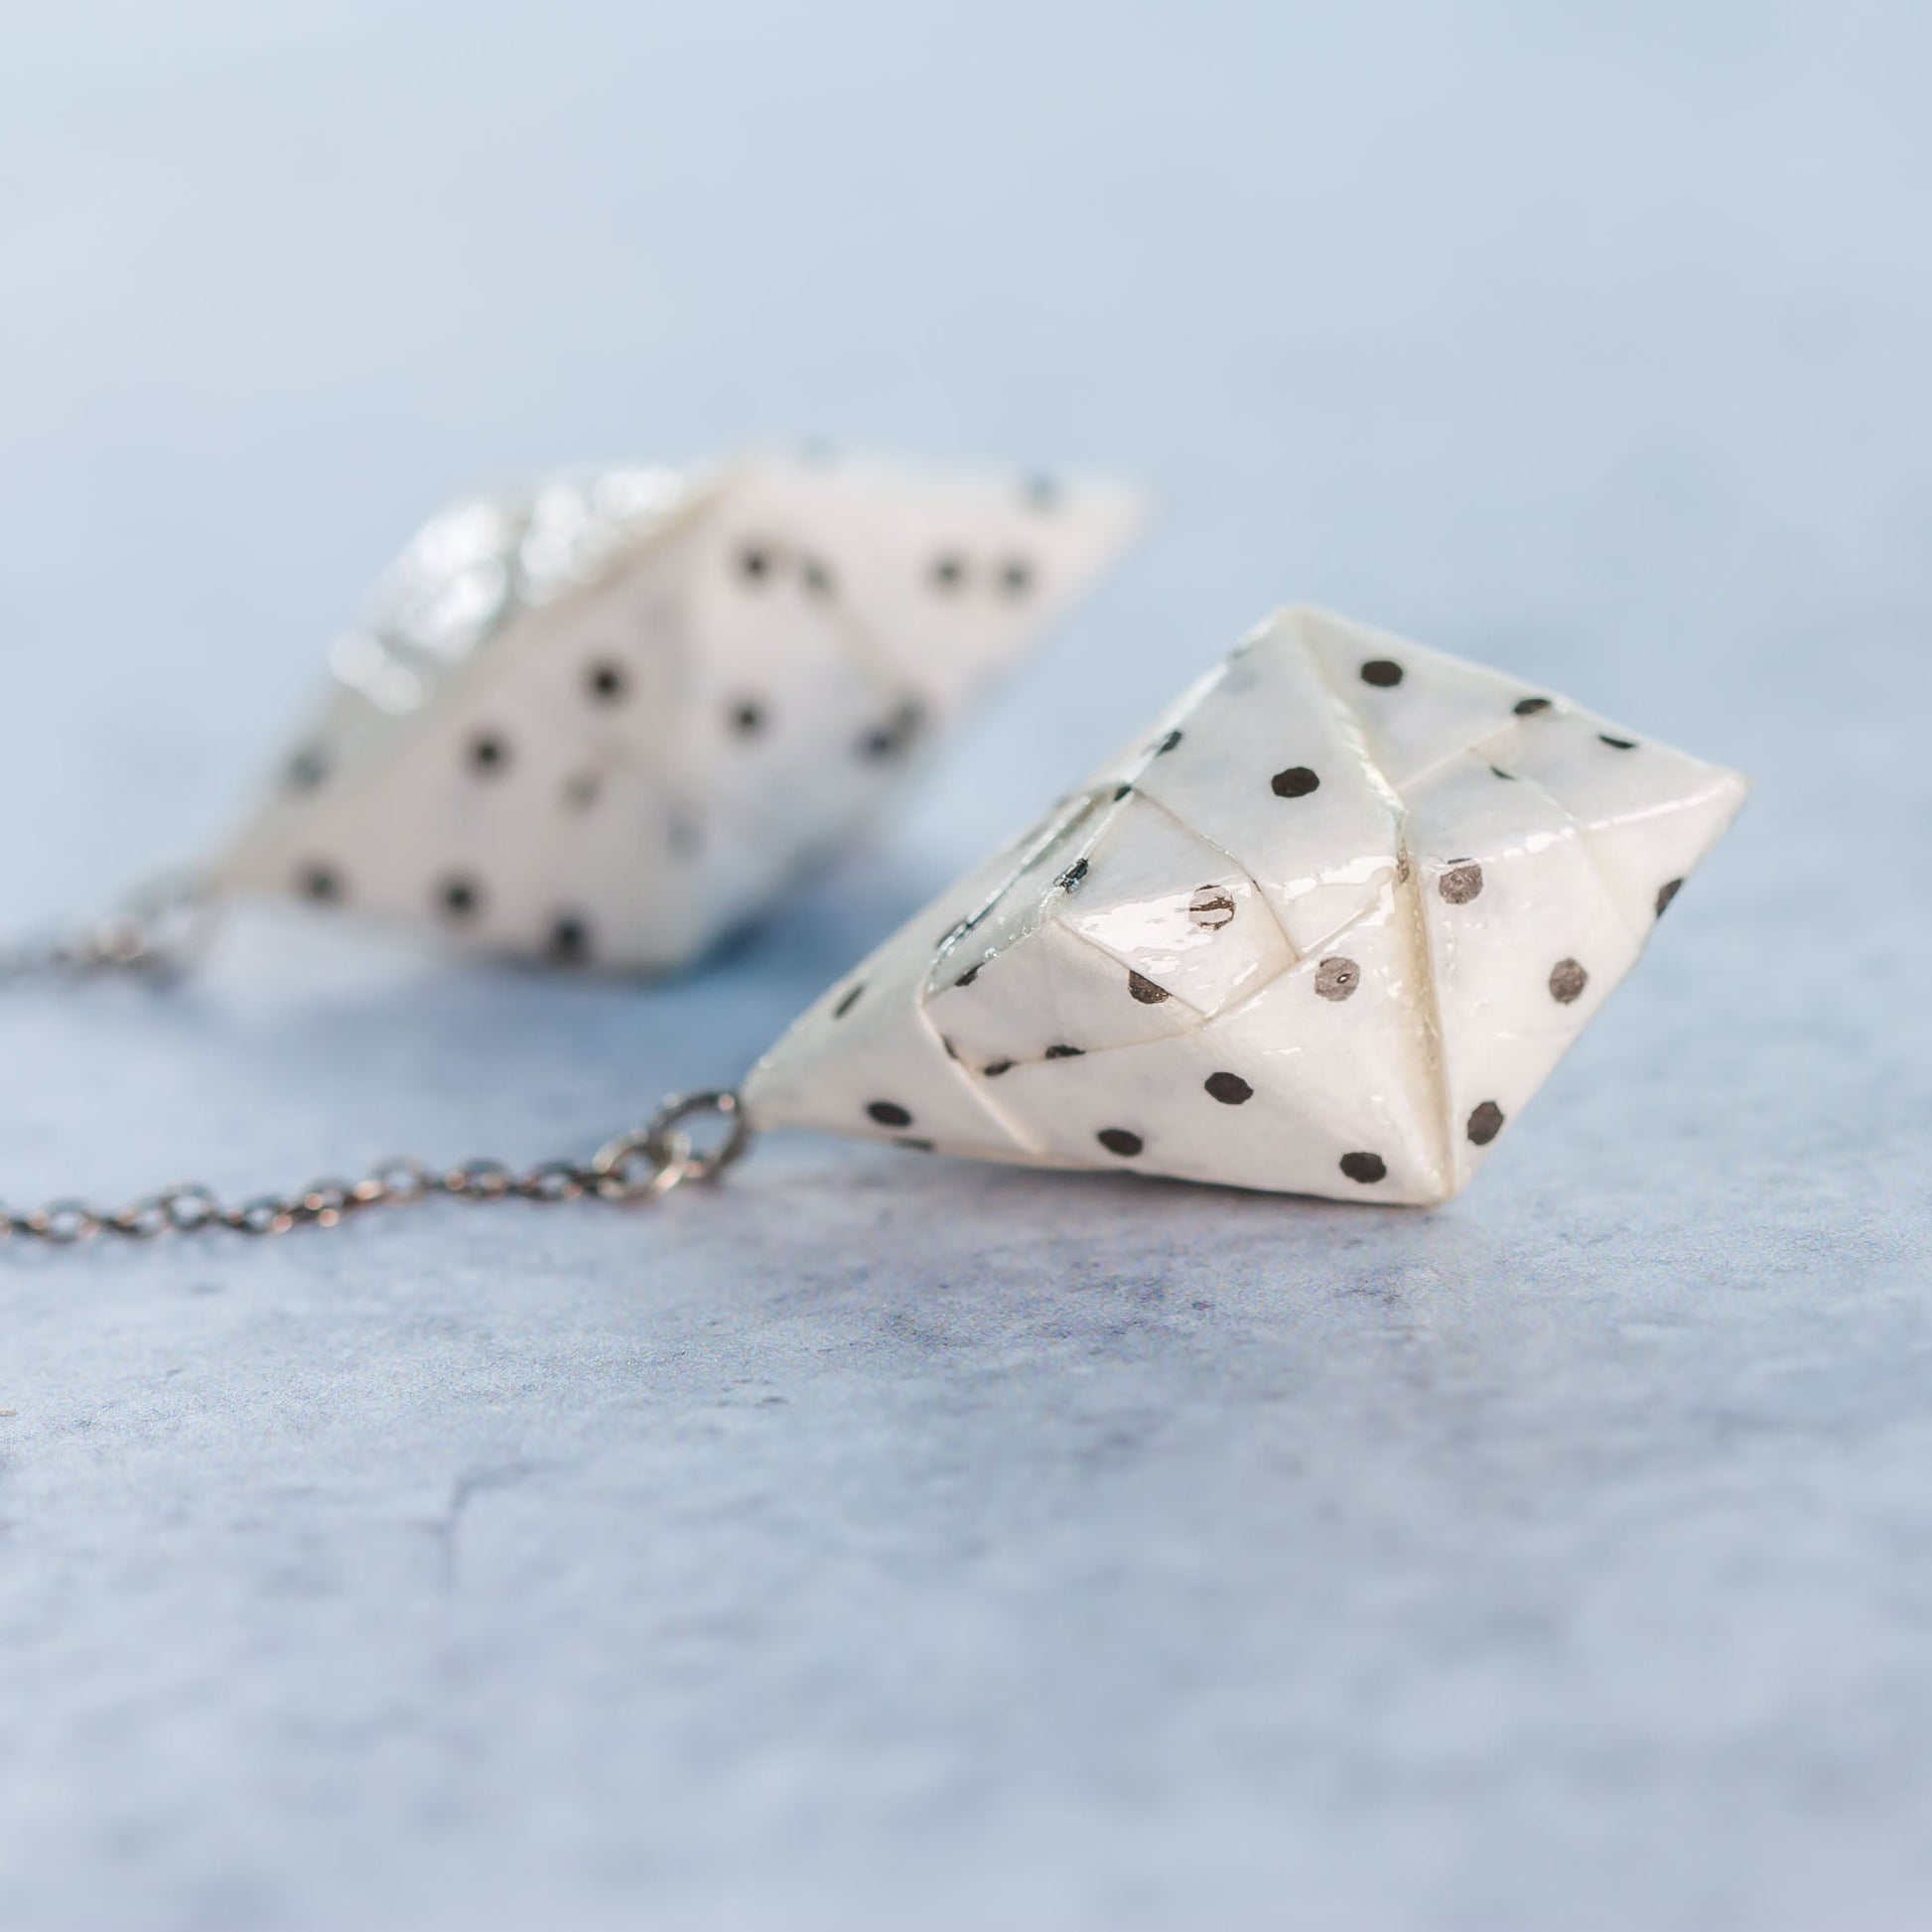 Origami Diamond Paper Earrings - White Polka Dot Design - By LeeMo Designs in Bend, Oregon